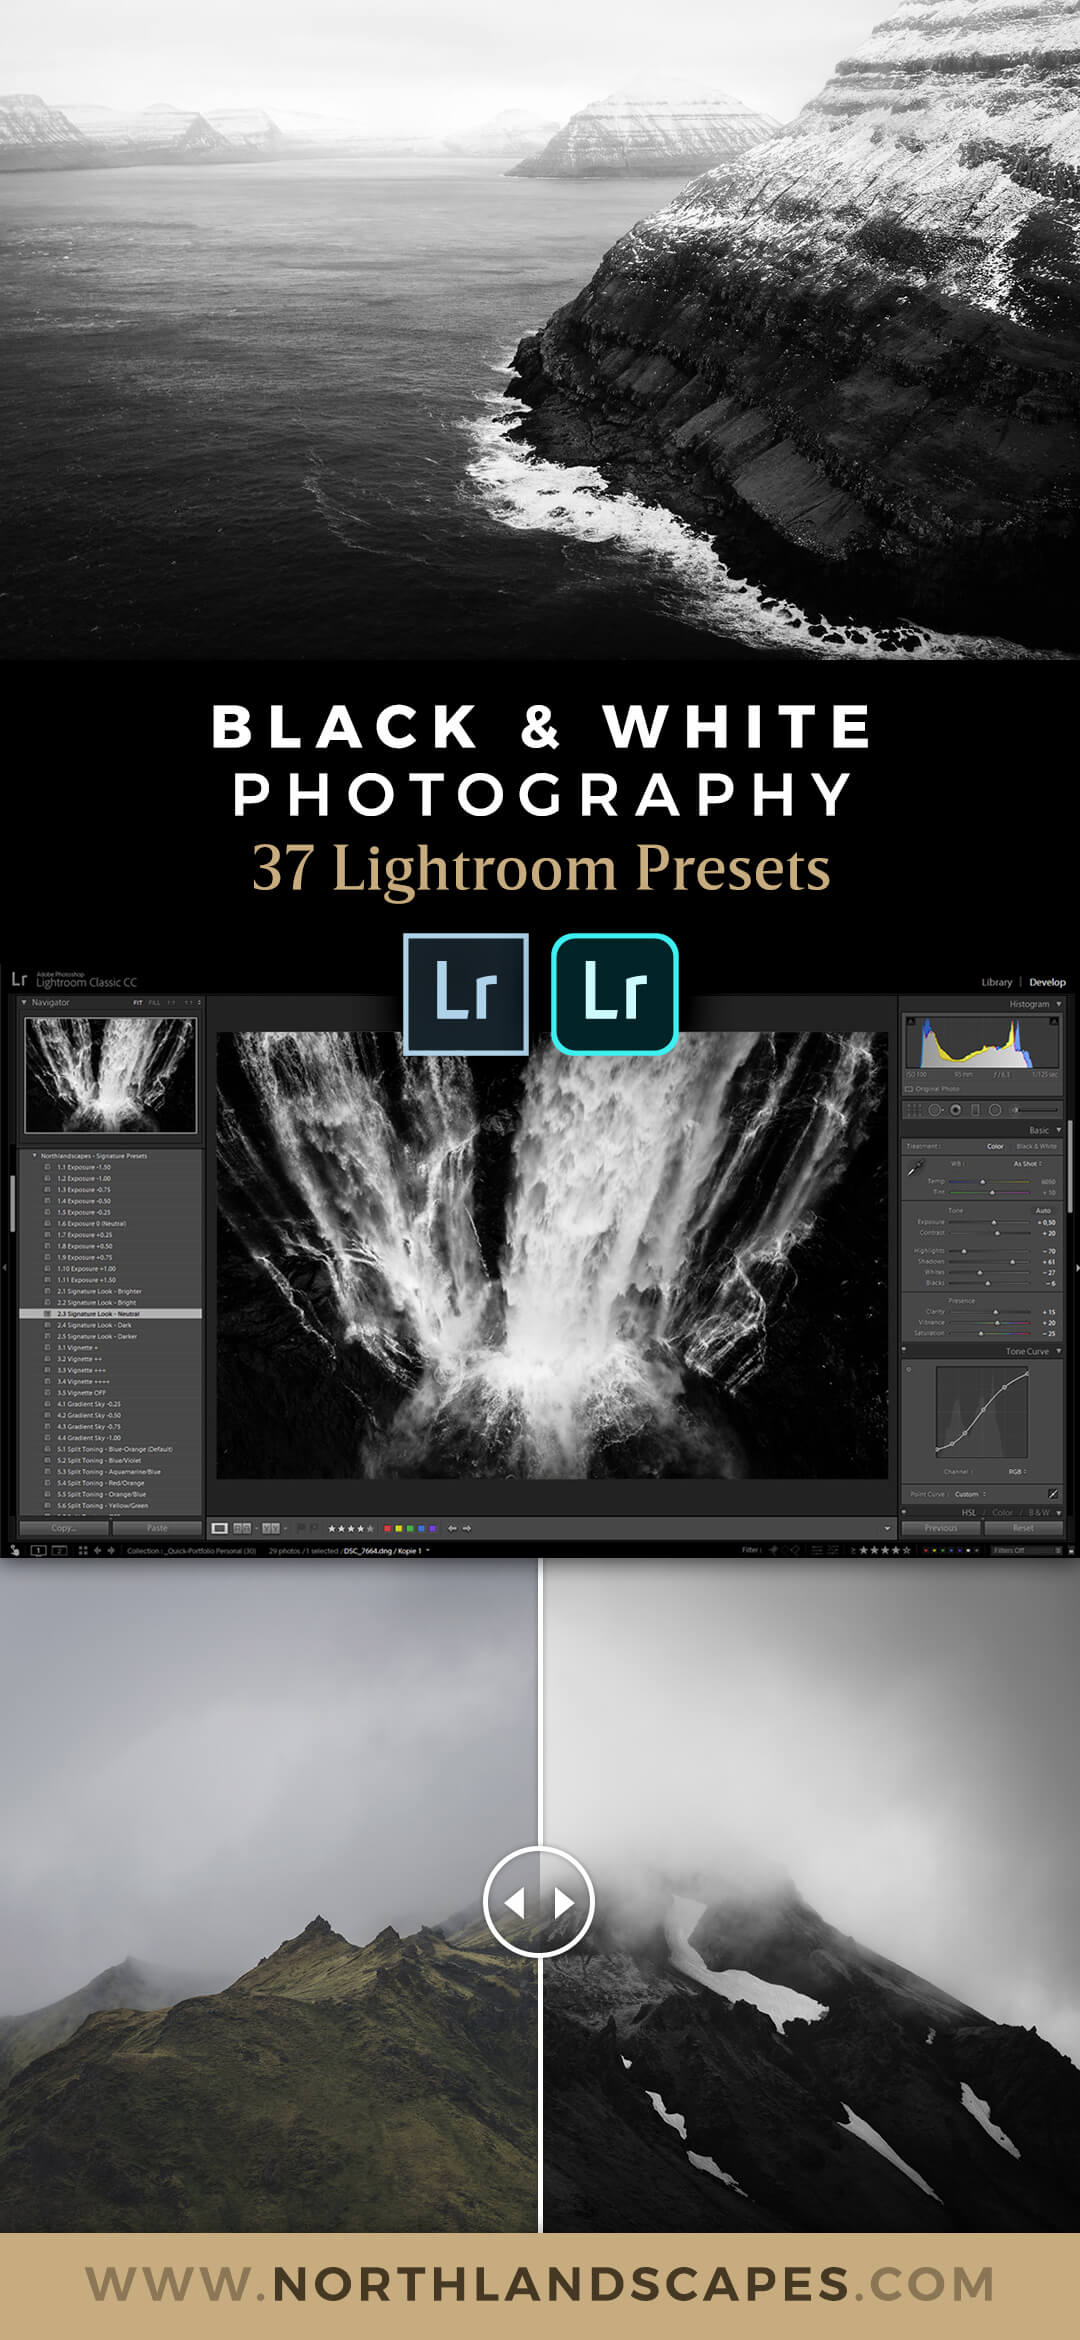 Black & White Lightroom Presets for Landscape, Nature and Travel Photography